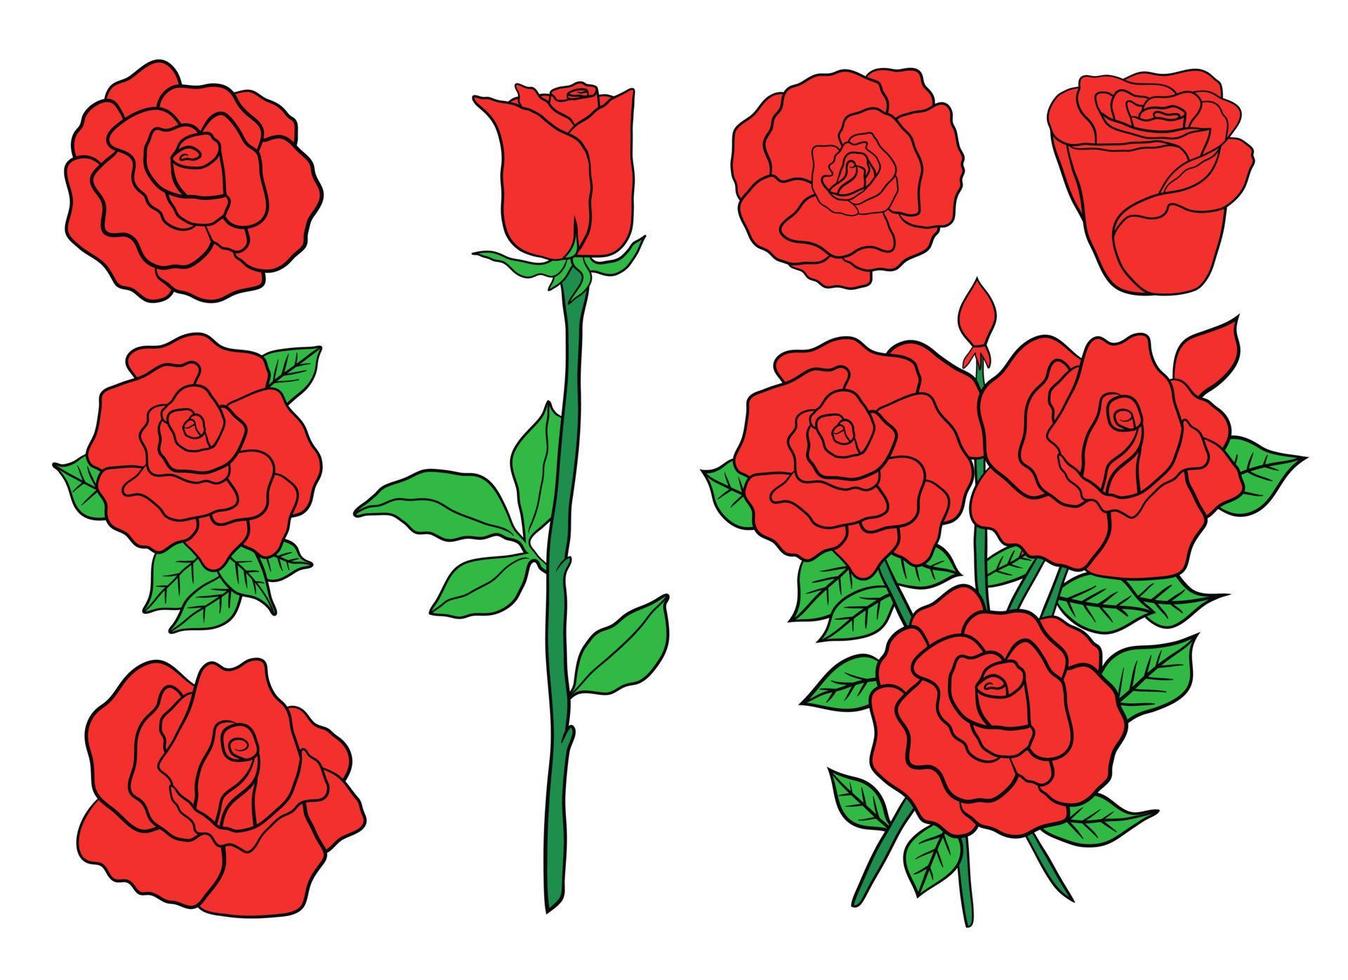 rosor vektor design illustration isolerad på vit bakgrund